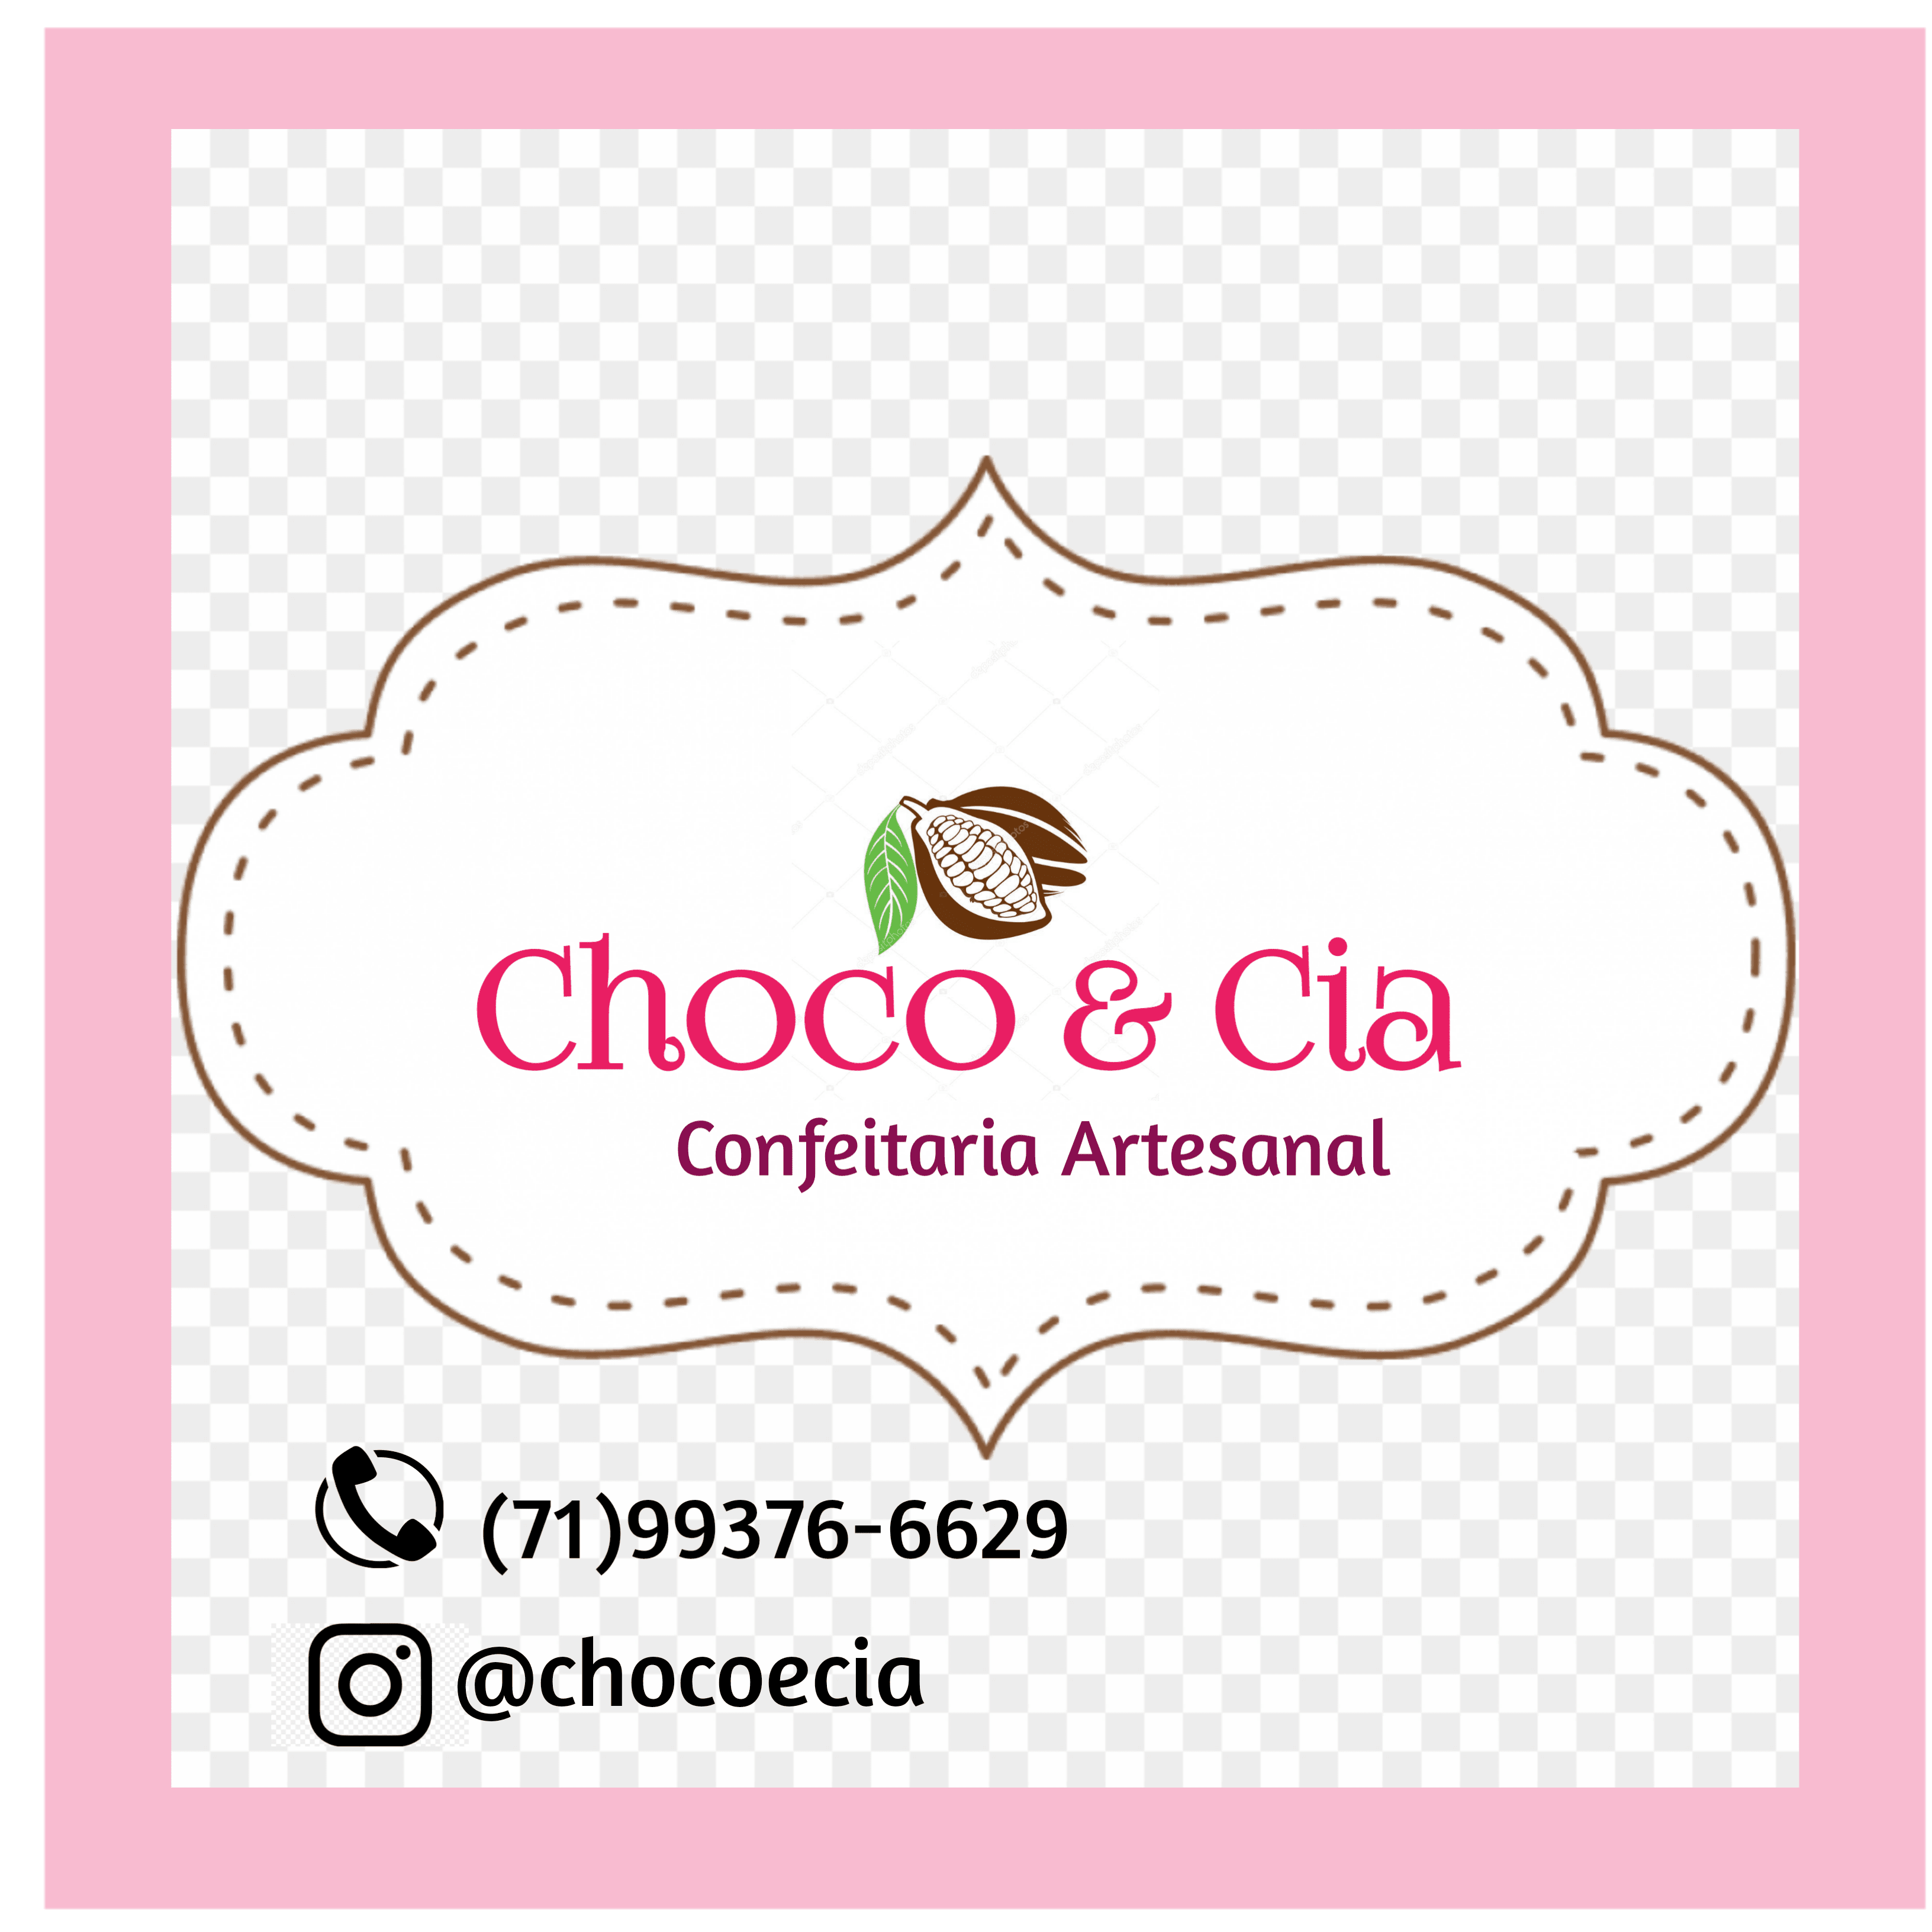 Choco & Cia, Confeitaria Artesanal